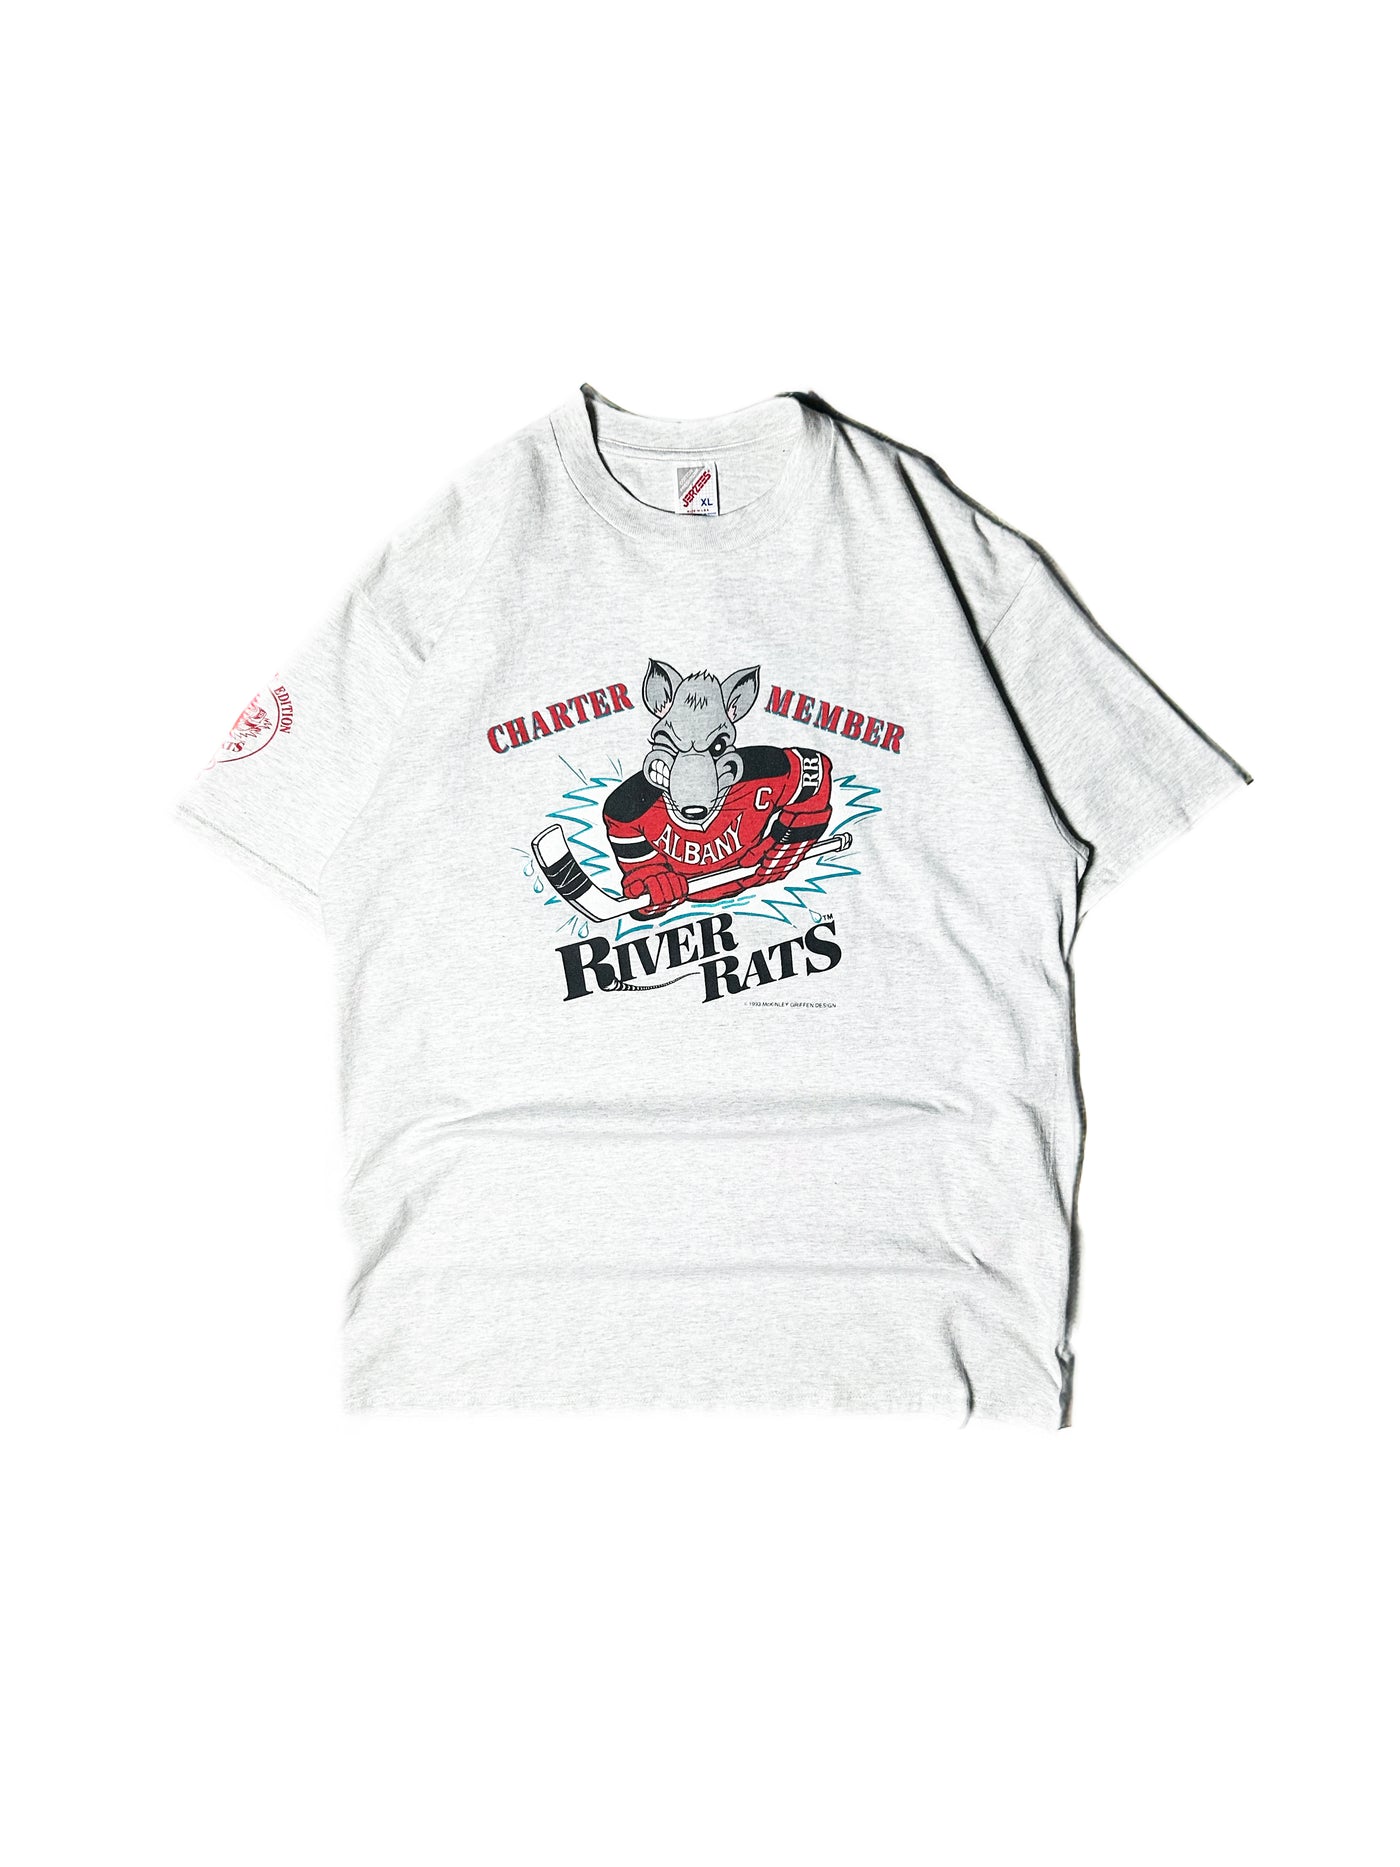 Vintage 1993 Albany River Rats T-Shirt